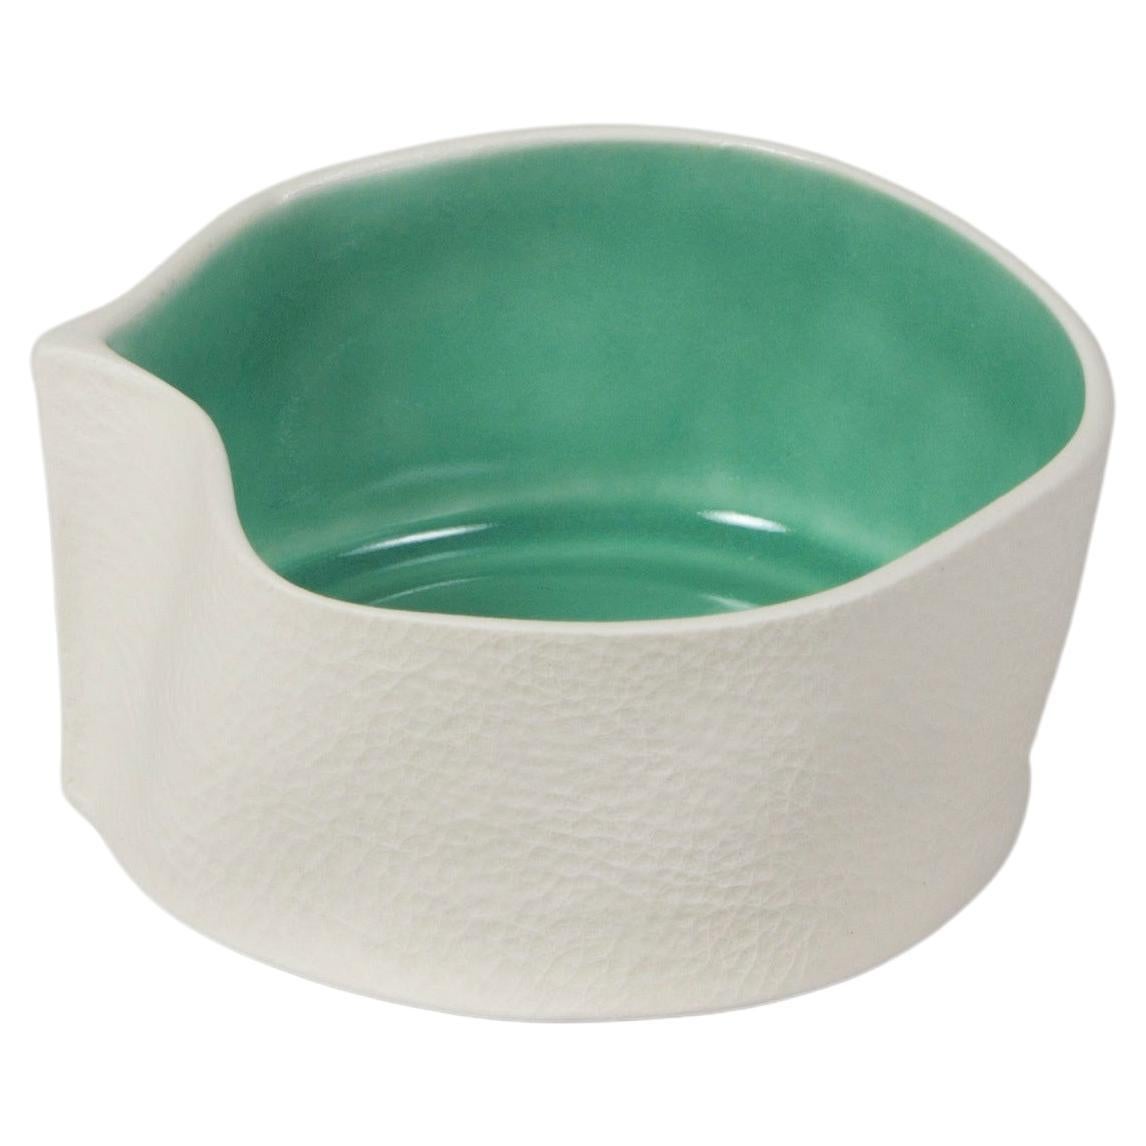 White & Mint Green Small Ceramic Kawa Dish, Textured Porcelain Catchall Bowl